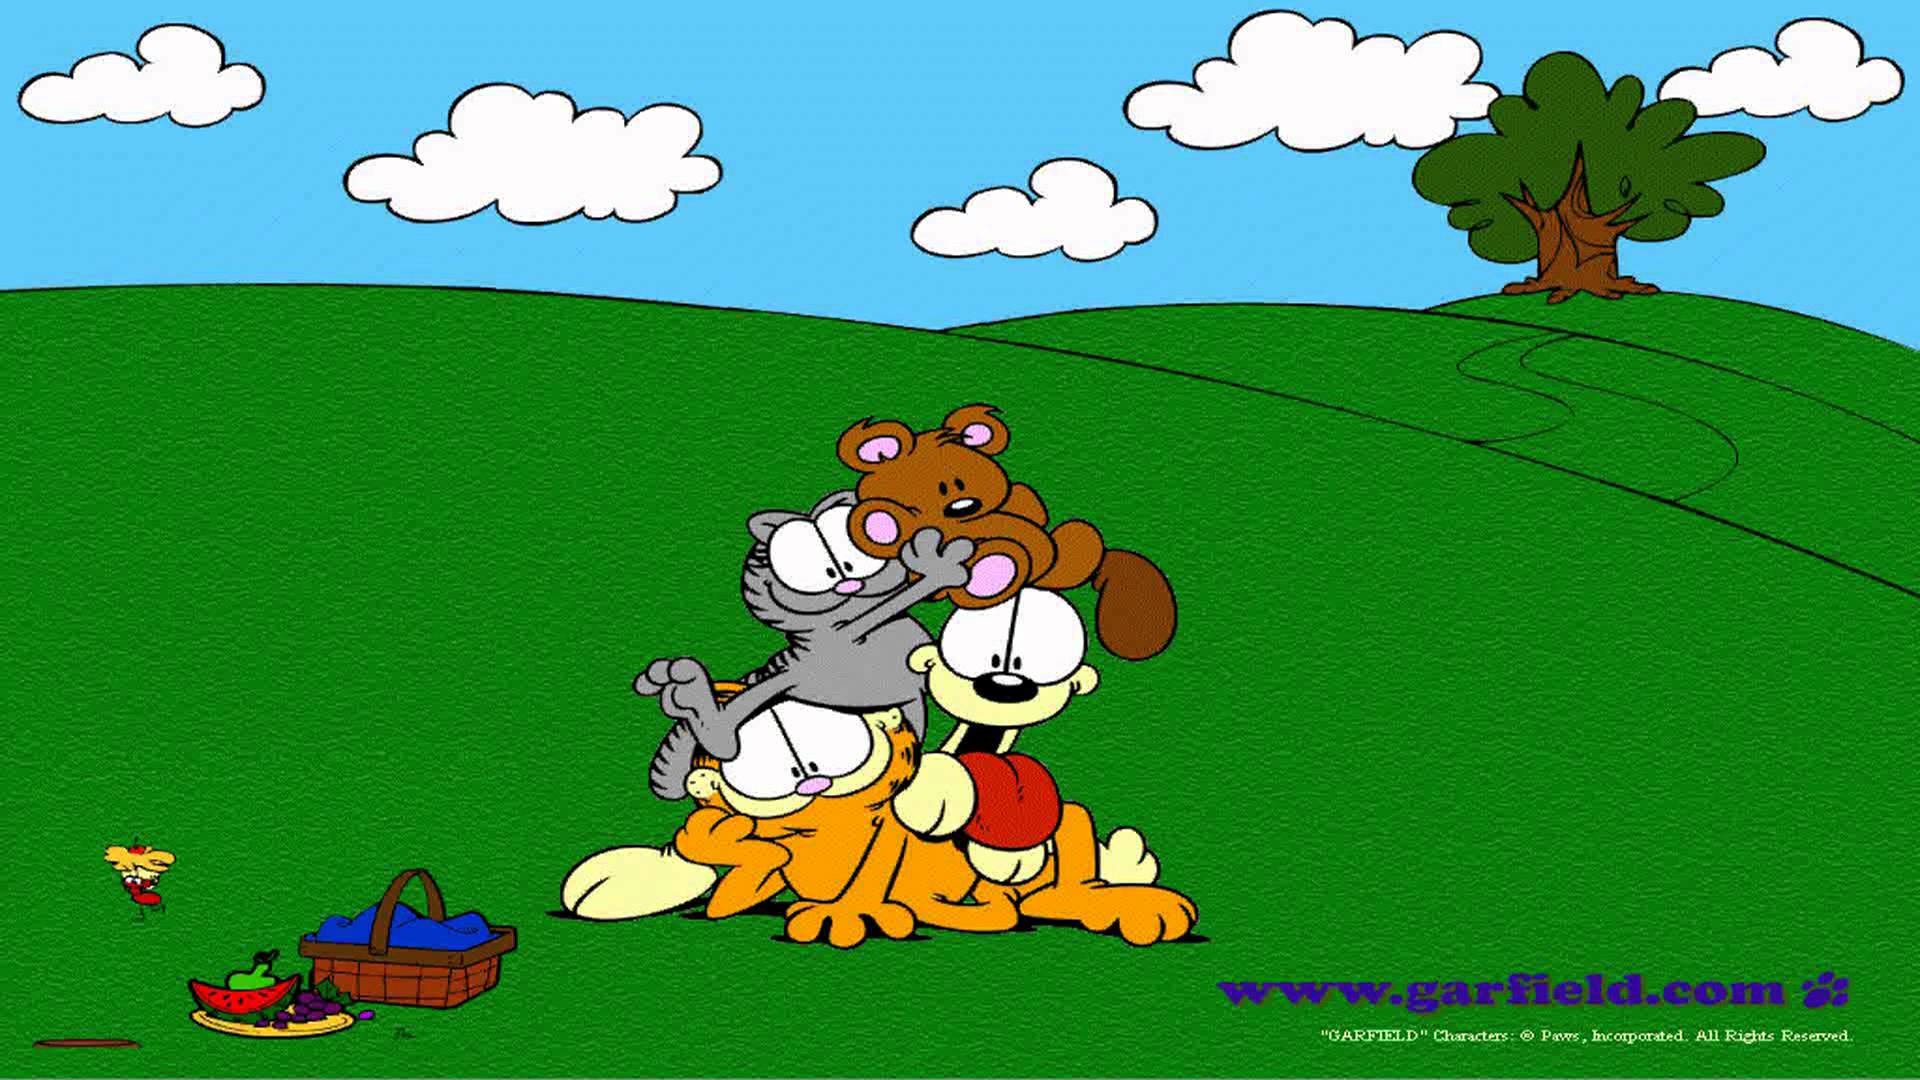 1920x1080 Microsoft Plus! 98 Animated Garfield Wallpaper - YouTube